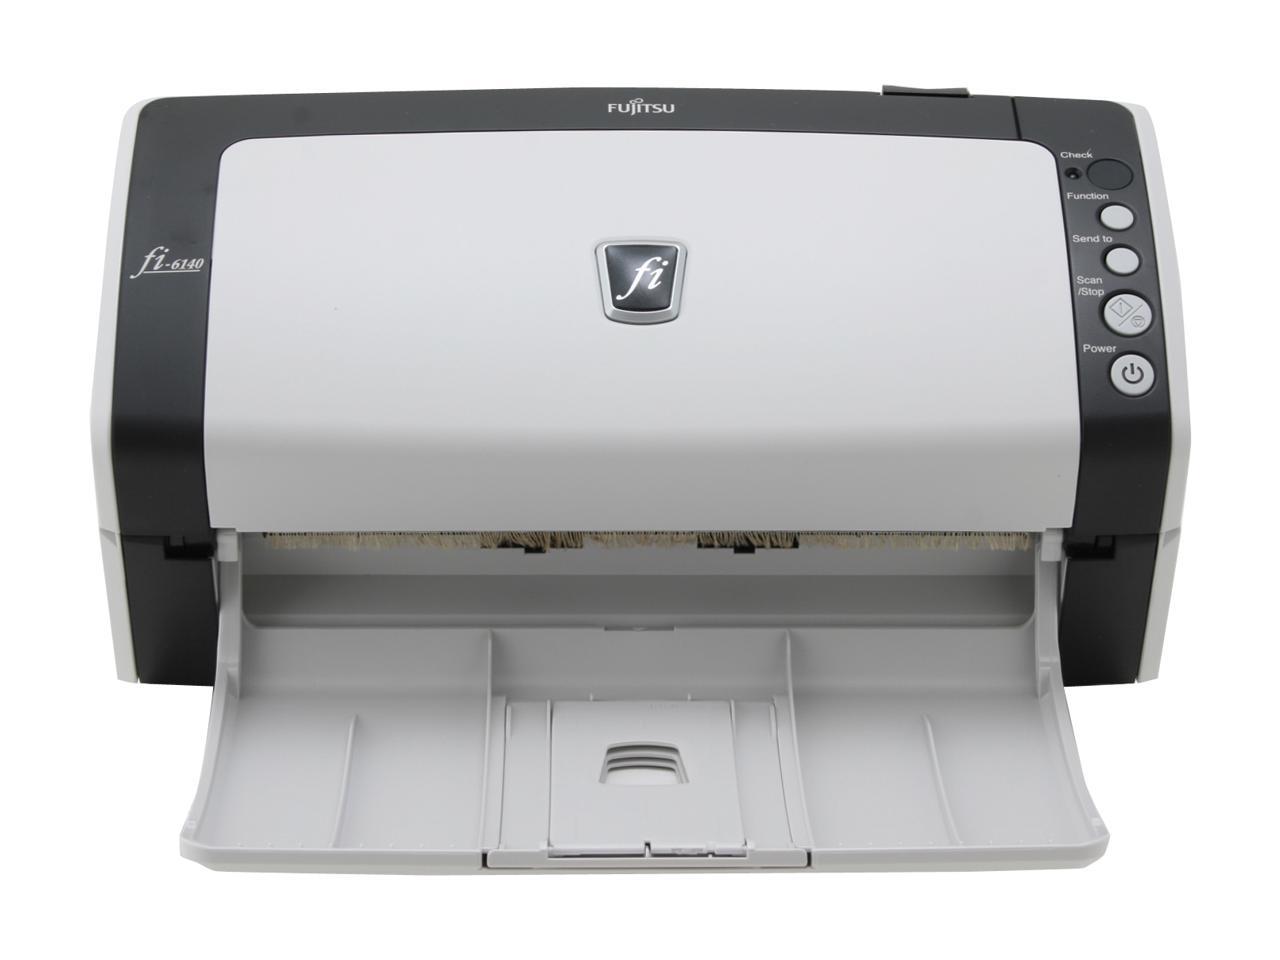 Fi-6140 color duplex document scanner